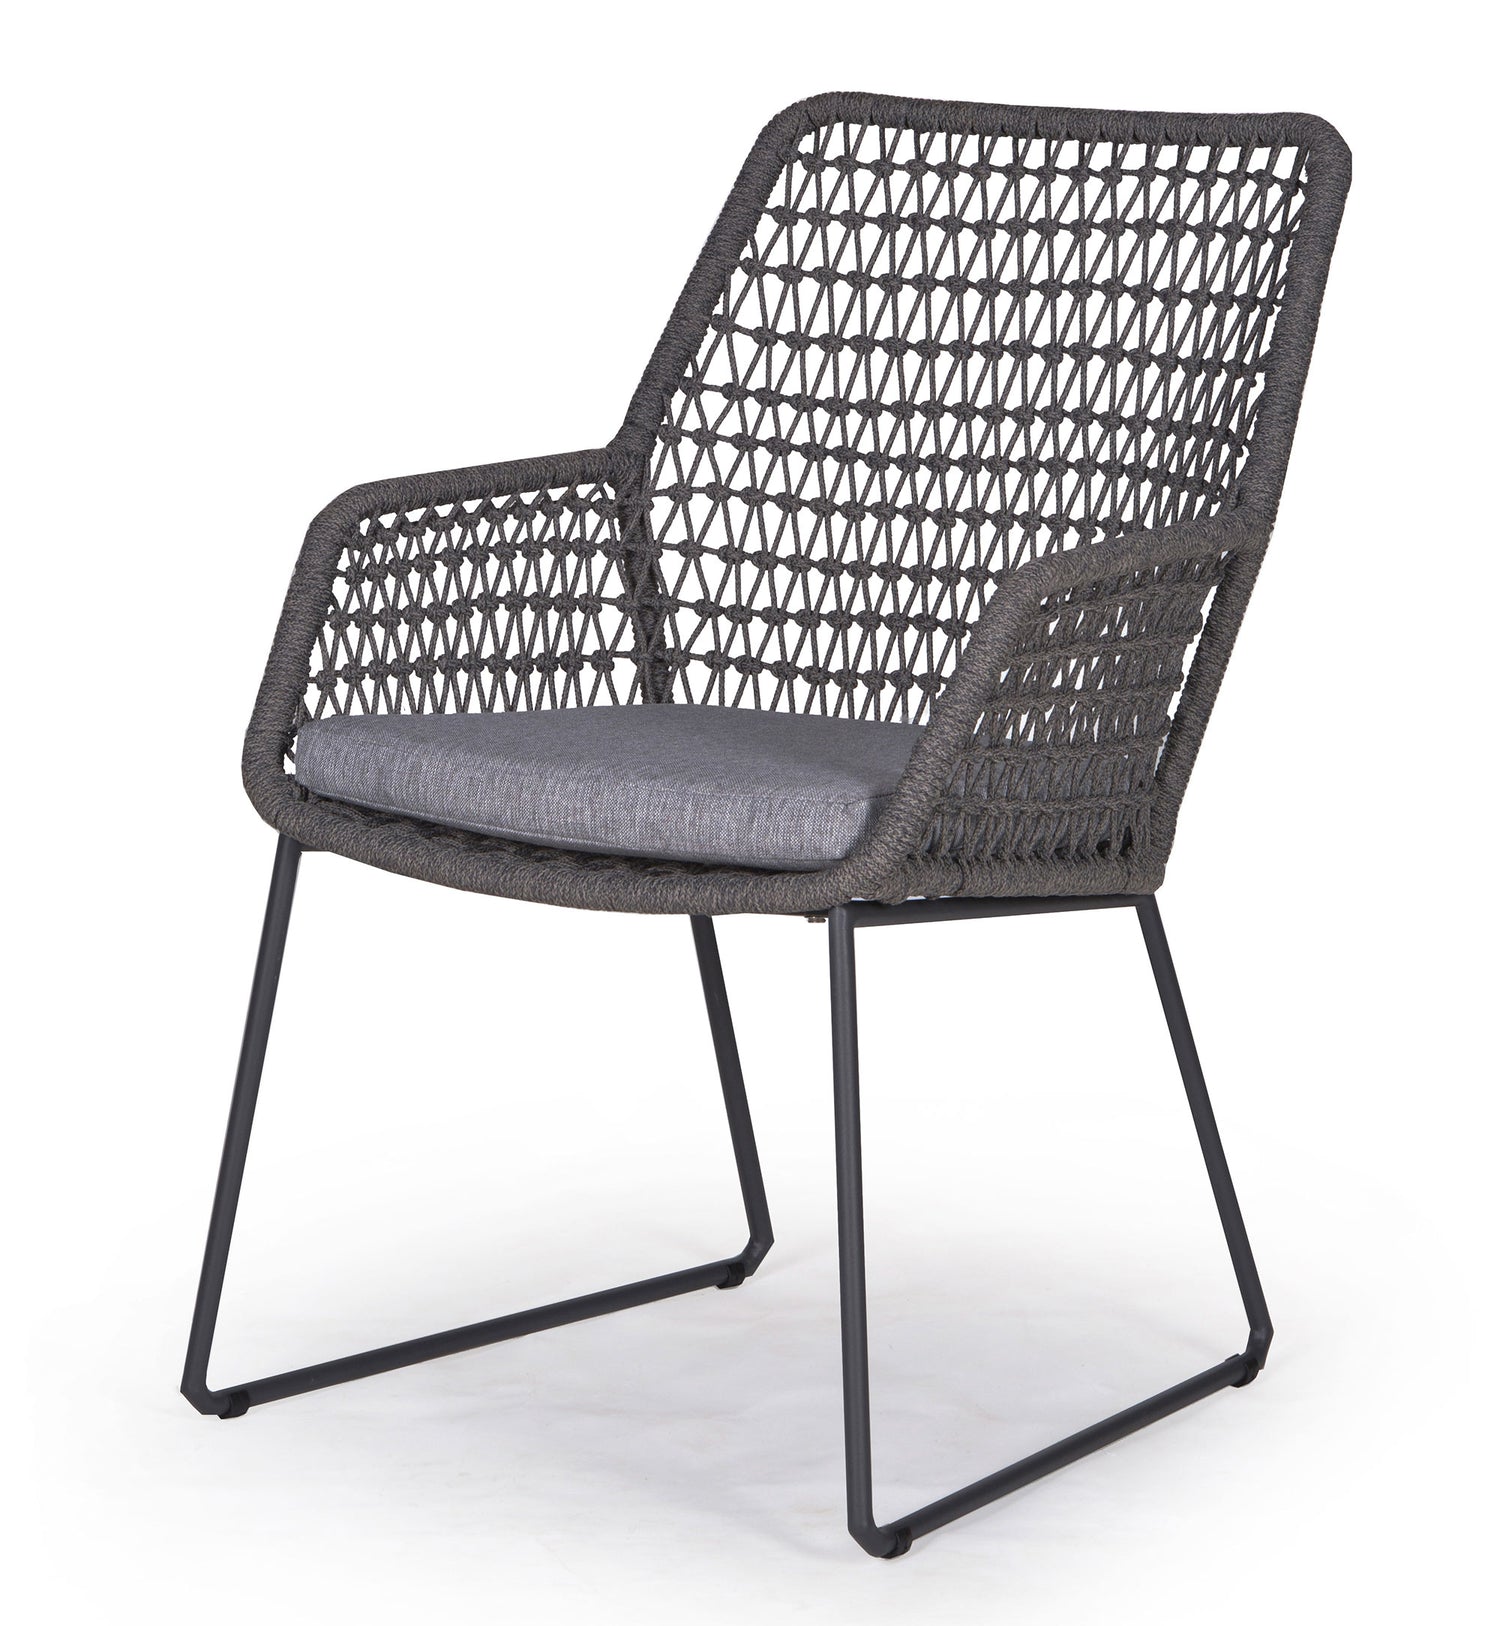 213537_-Babylon-dining-chair-with-cushion.jpg